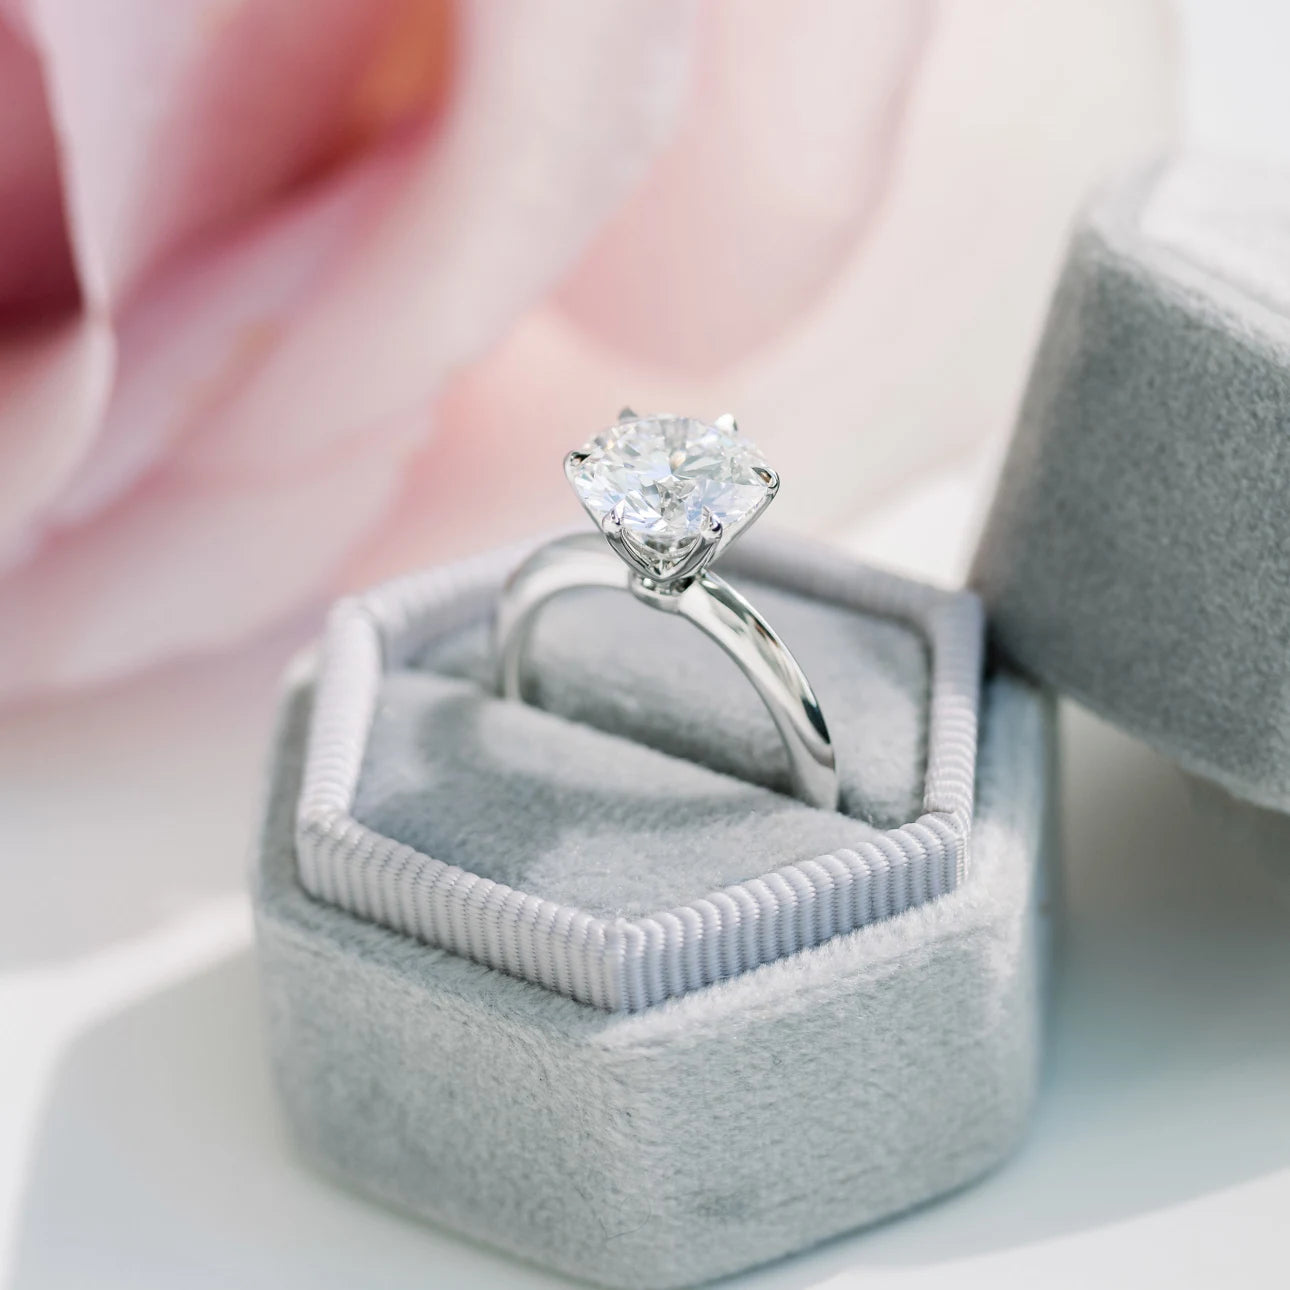 8 carat lab grown diamond ring